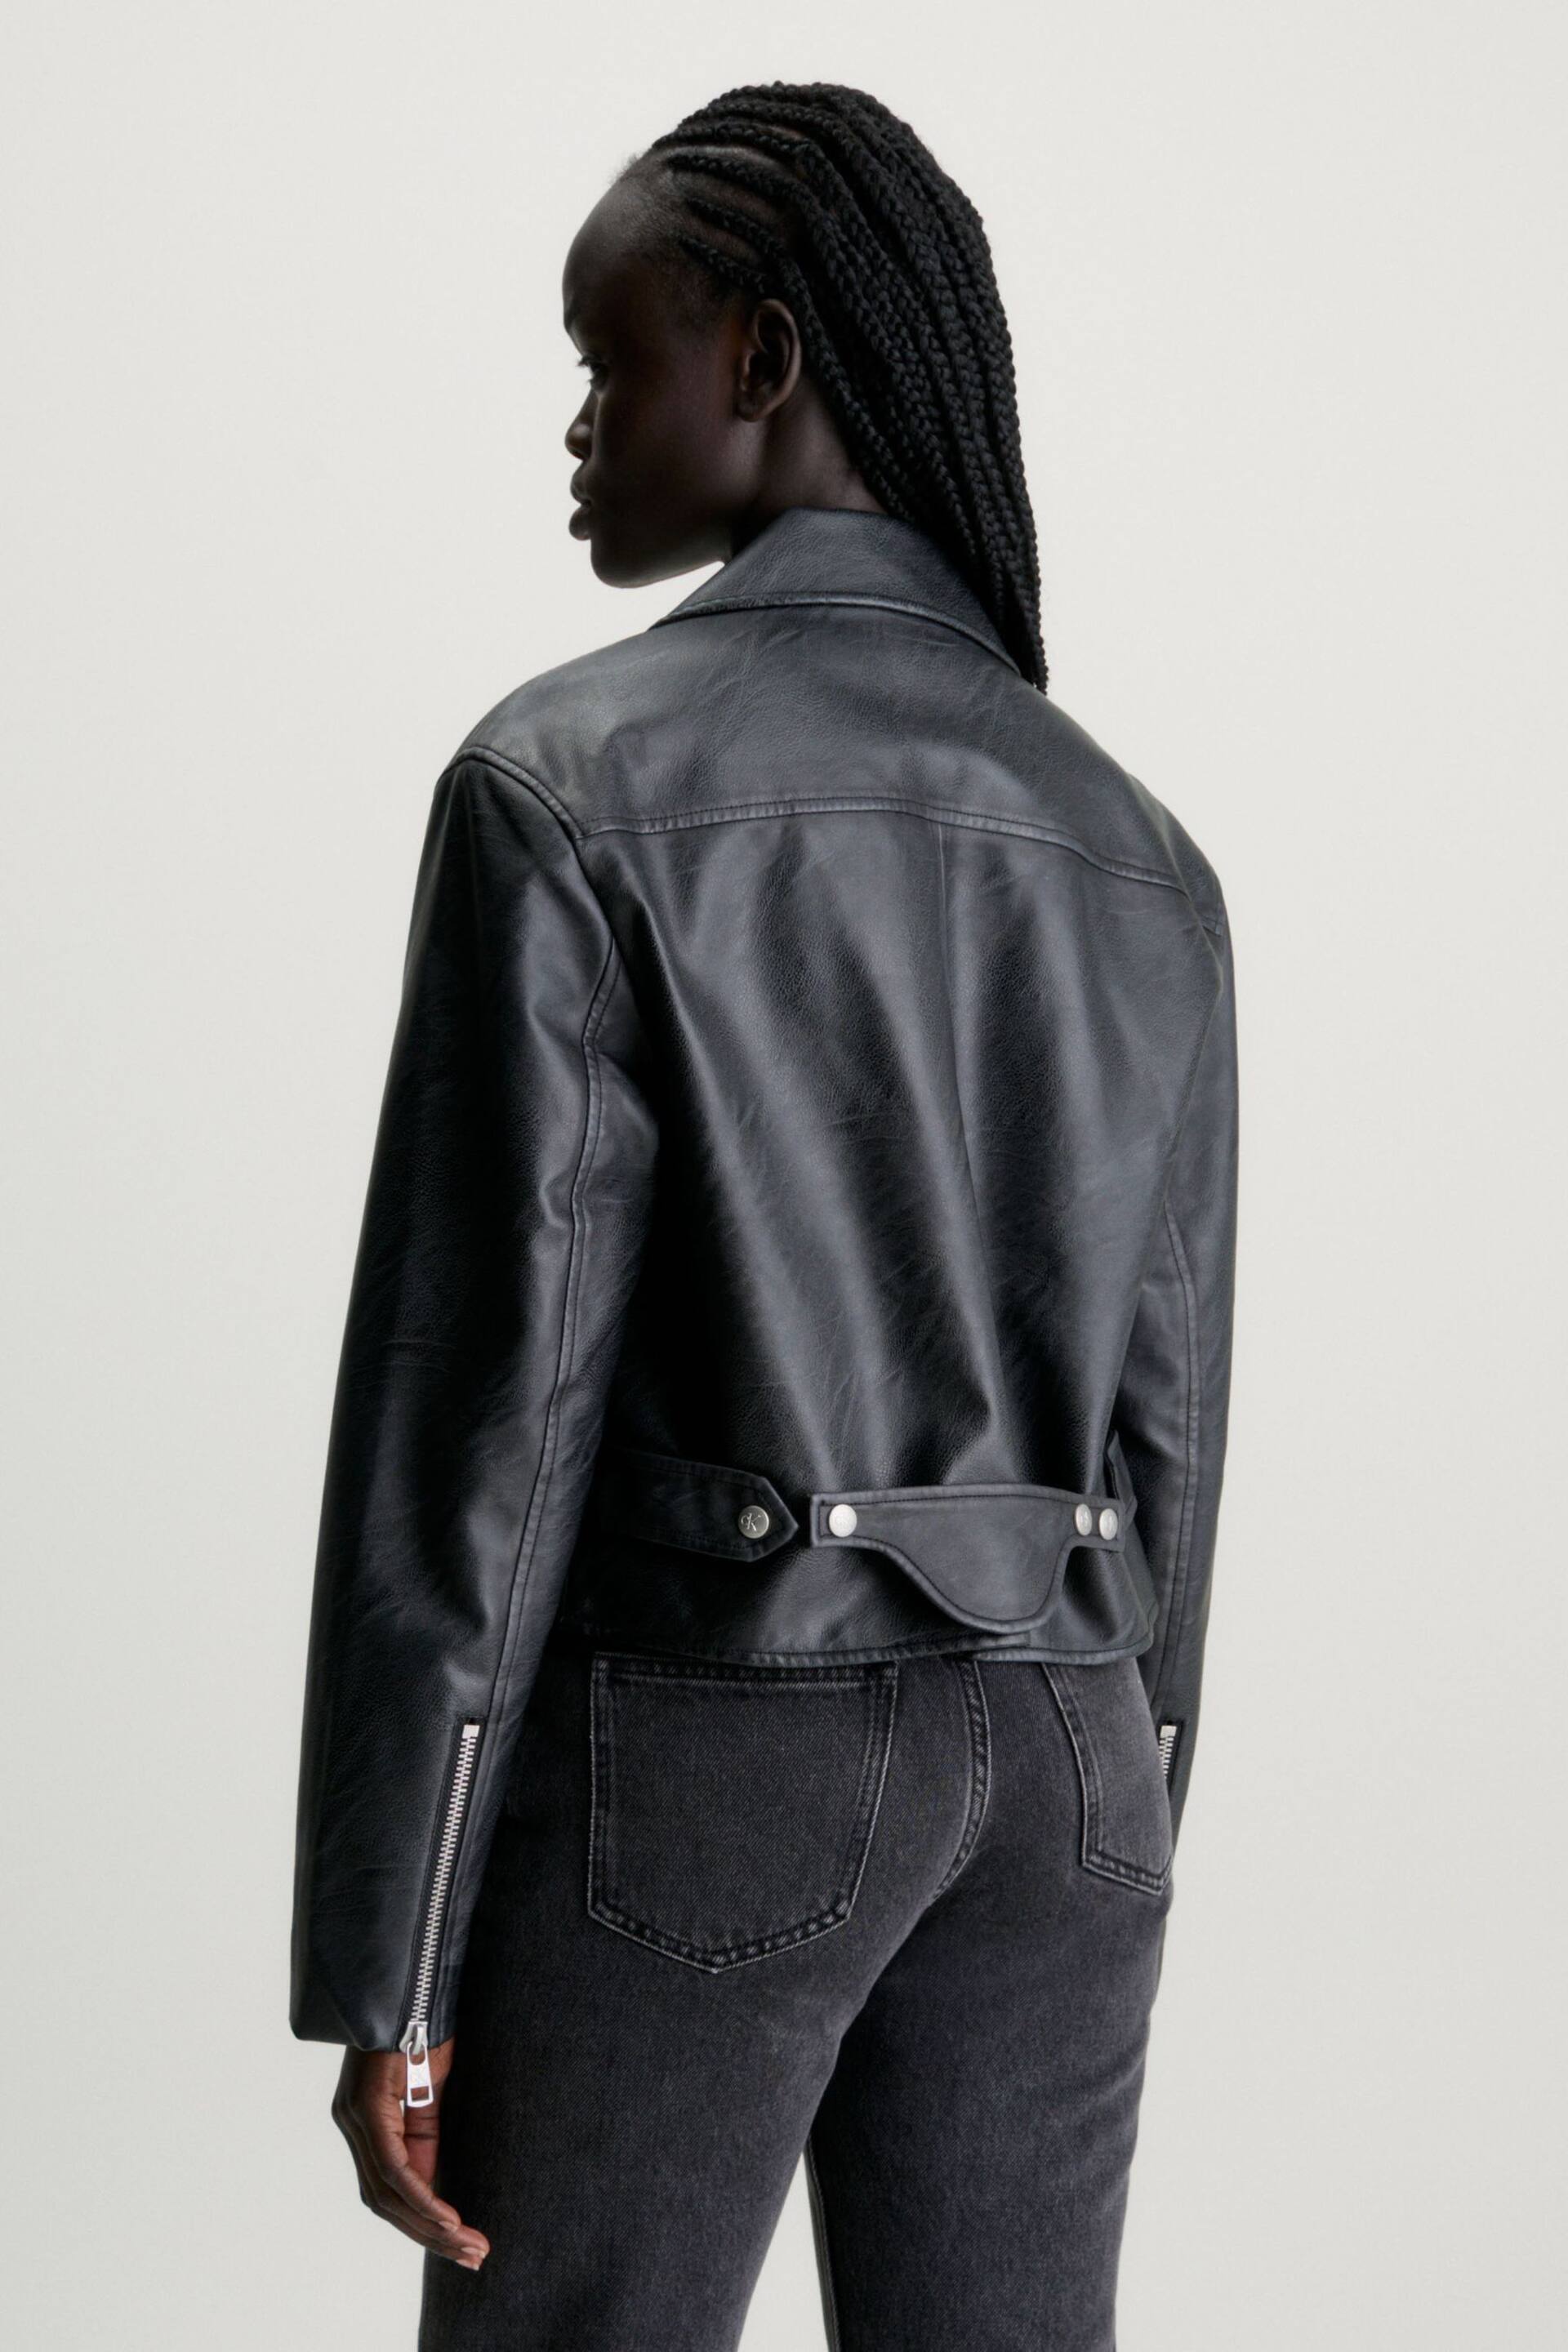 Calvin Klein Black Faux Leather Jacket - Image 2 of 6